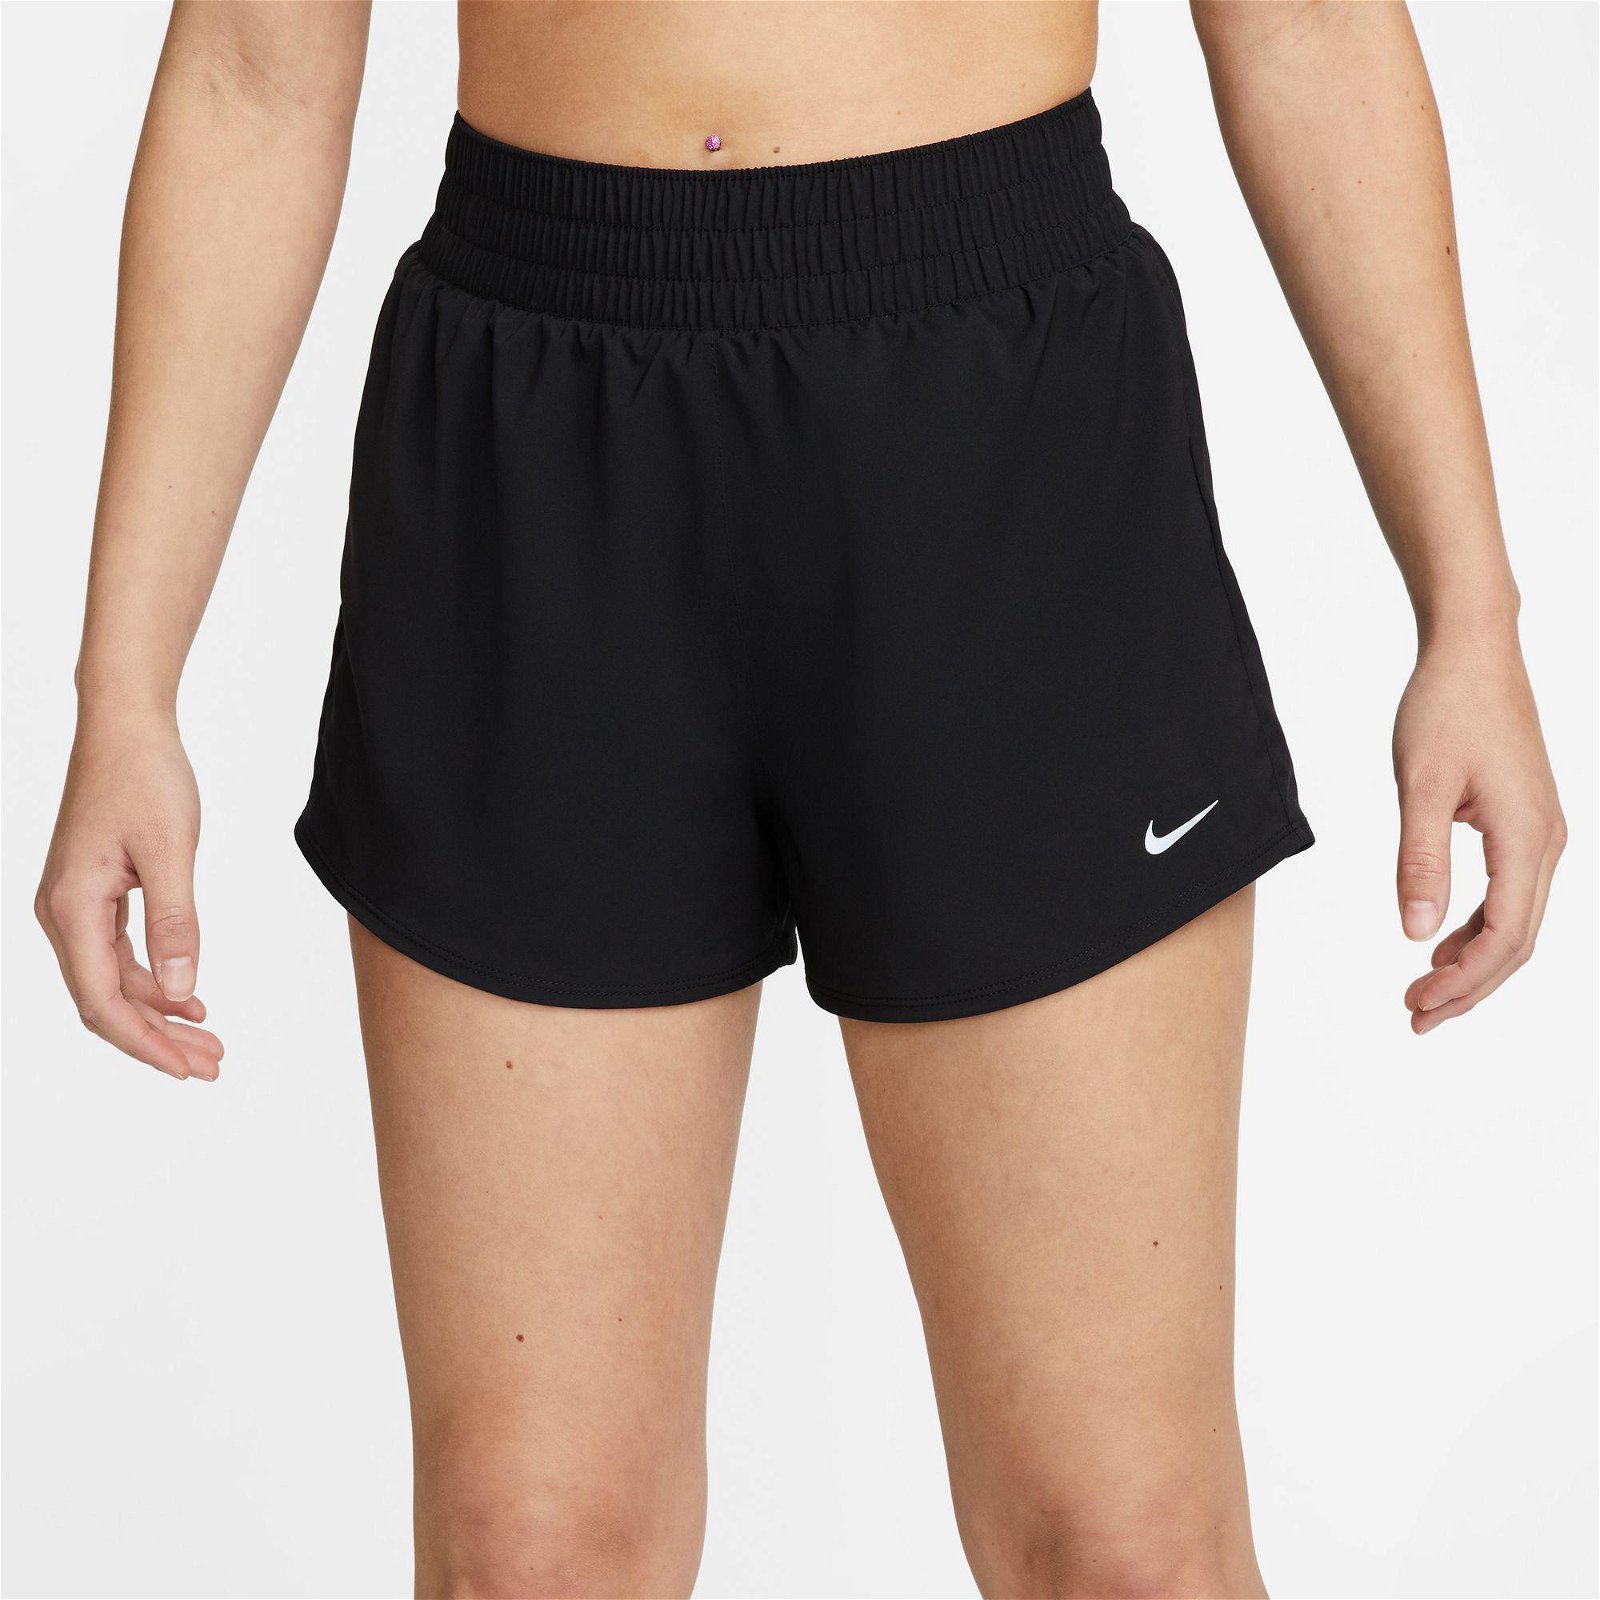 Nike One Dri-Fit High Rise 3 inç Short Kadın Siyah Şort